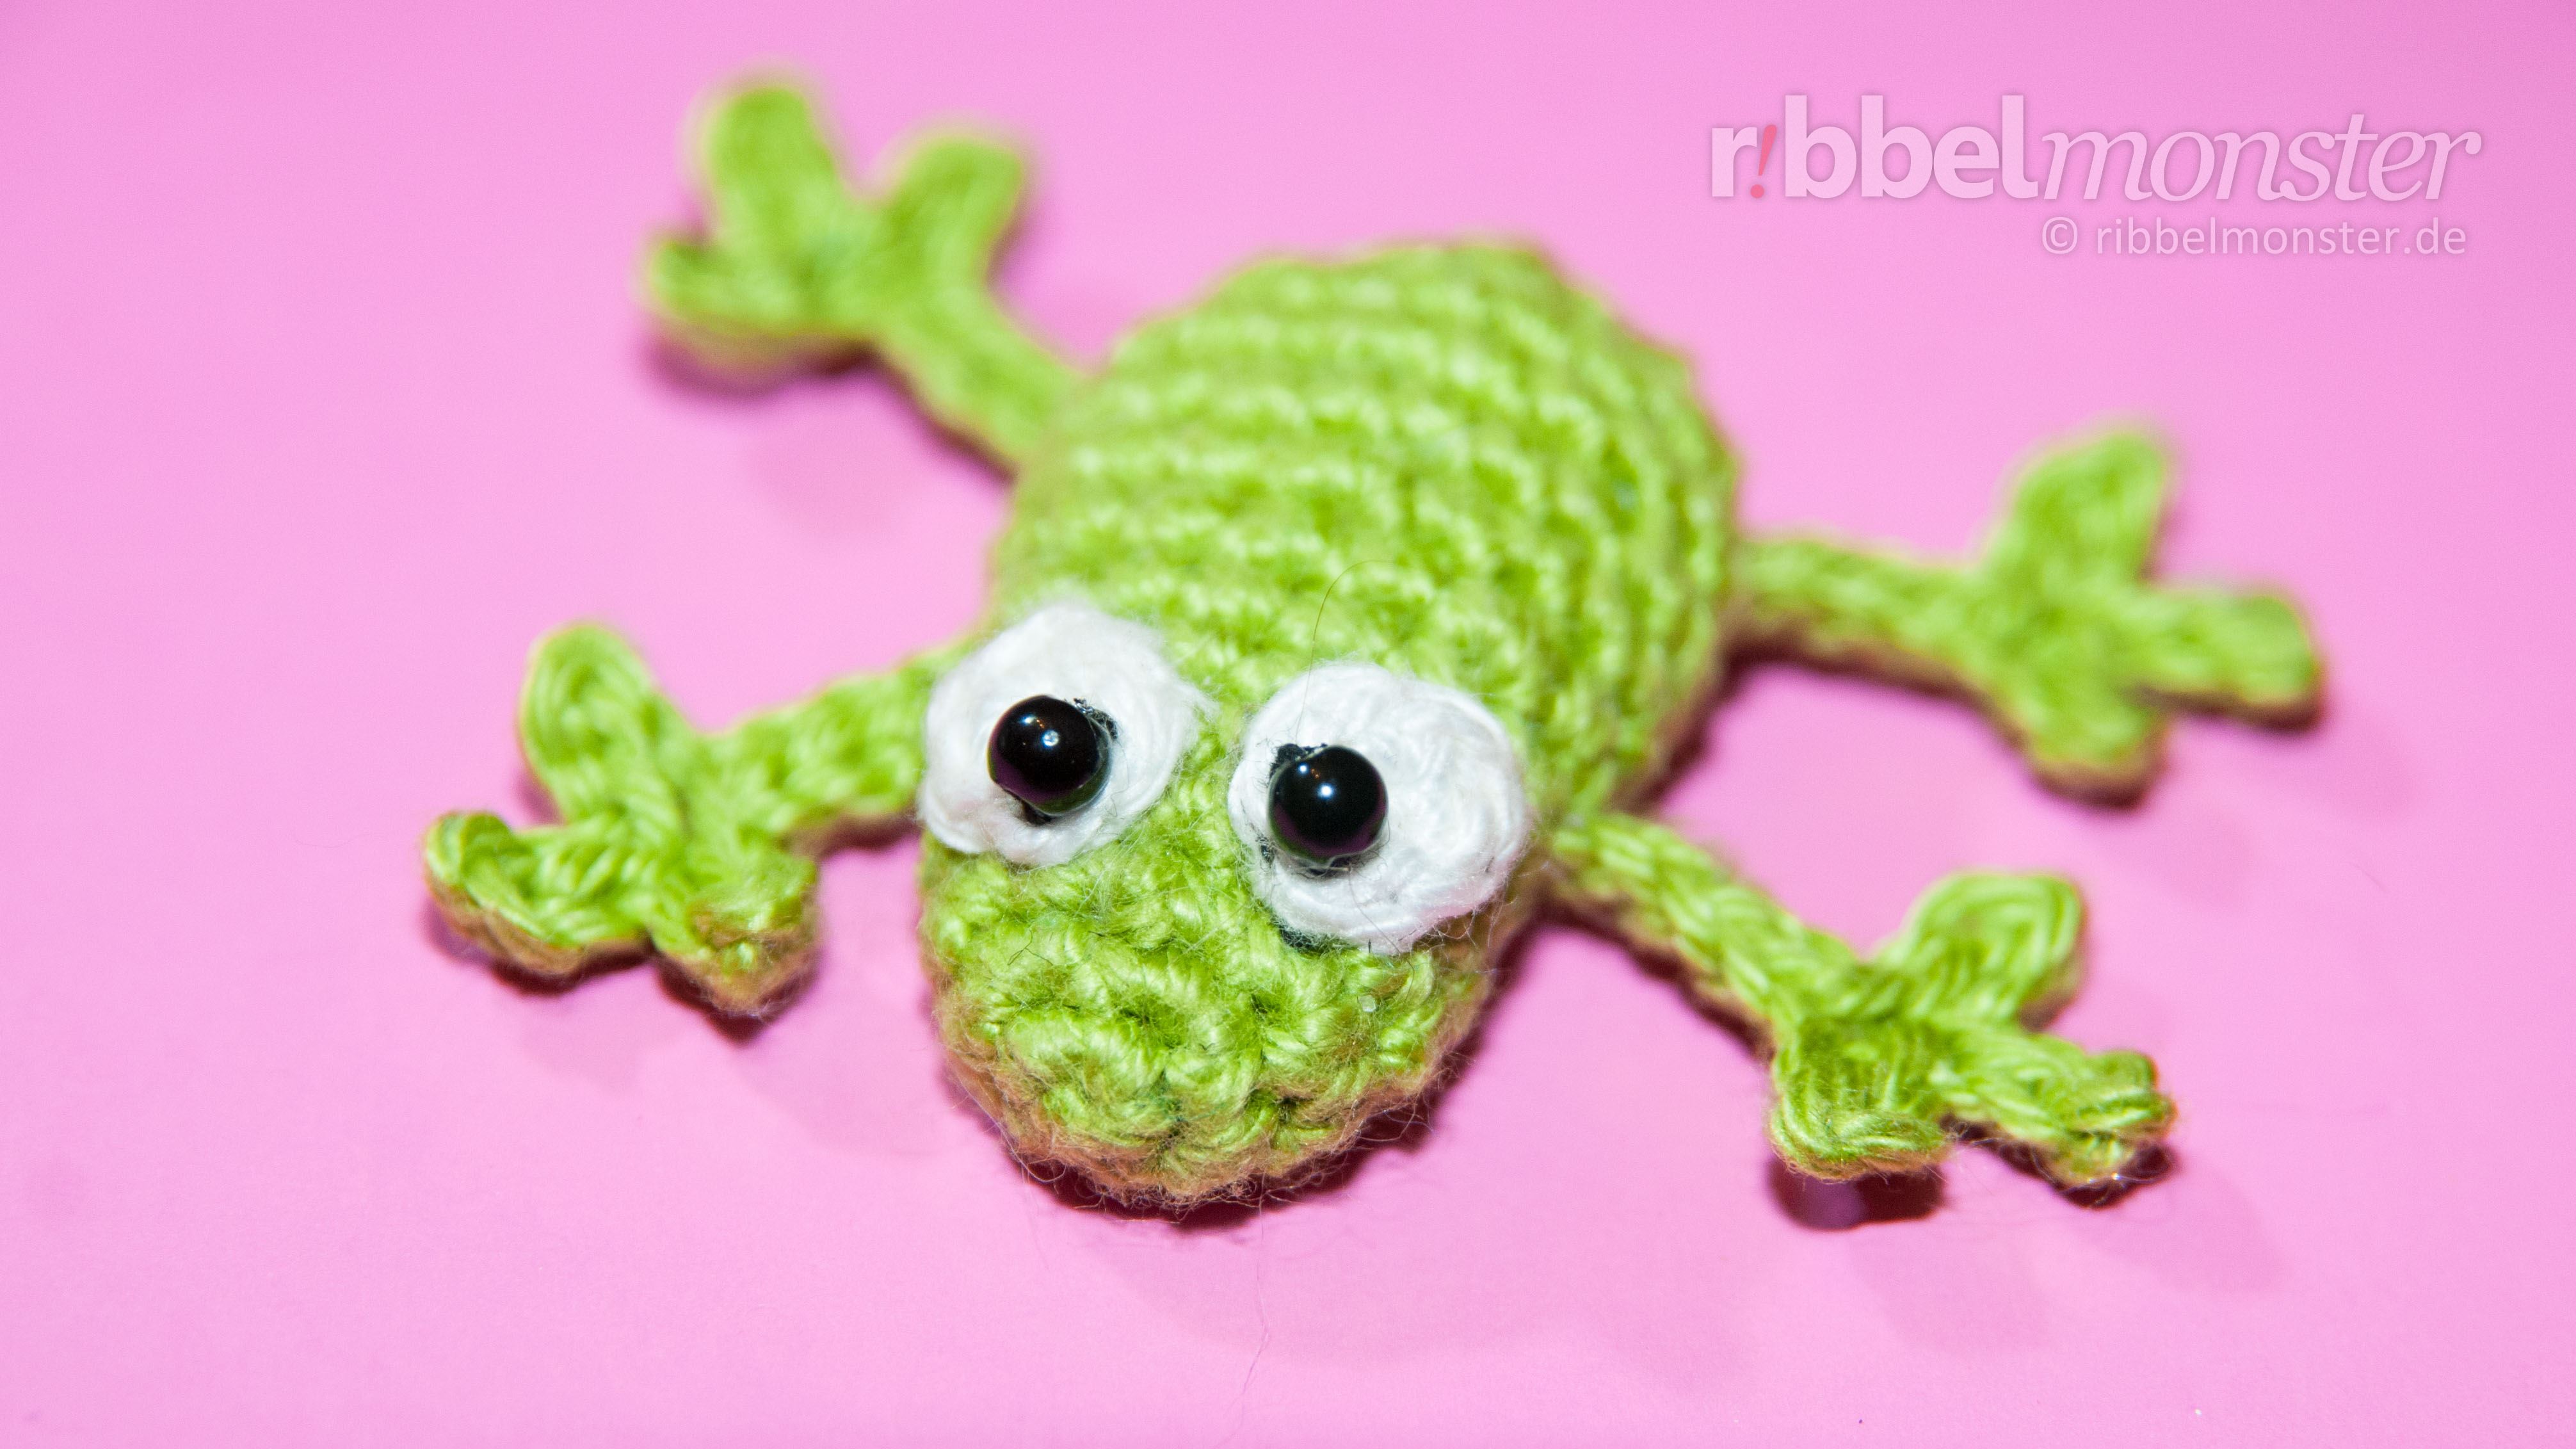 Amigurumi - Crochet Frog "Fröschlein" - Crochet Pattern